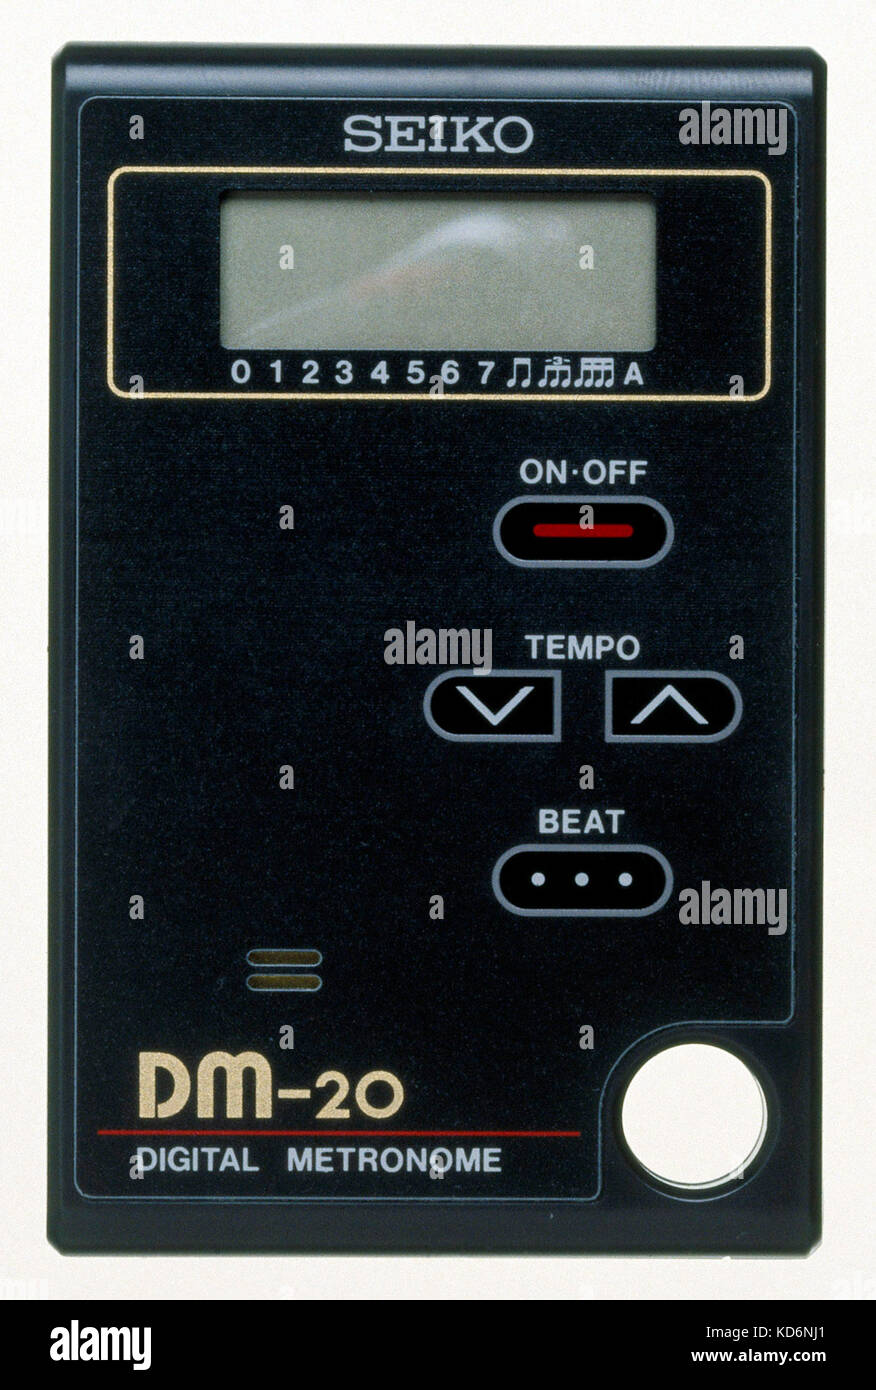 Seiko digital electronic metronome - with LCD display - DM-20 Stock Photo -  Alamy